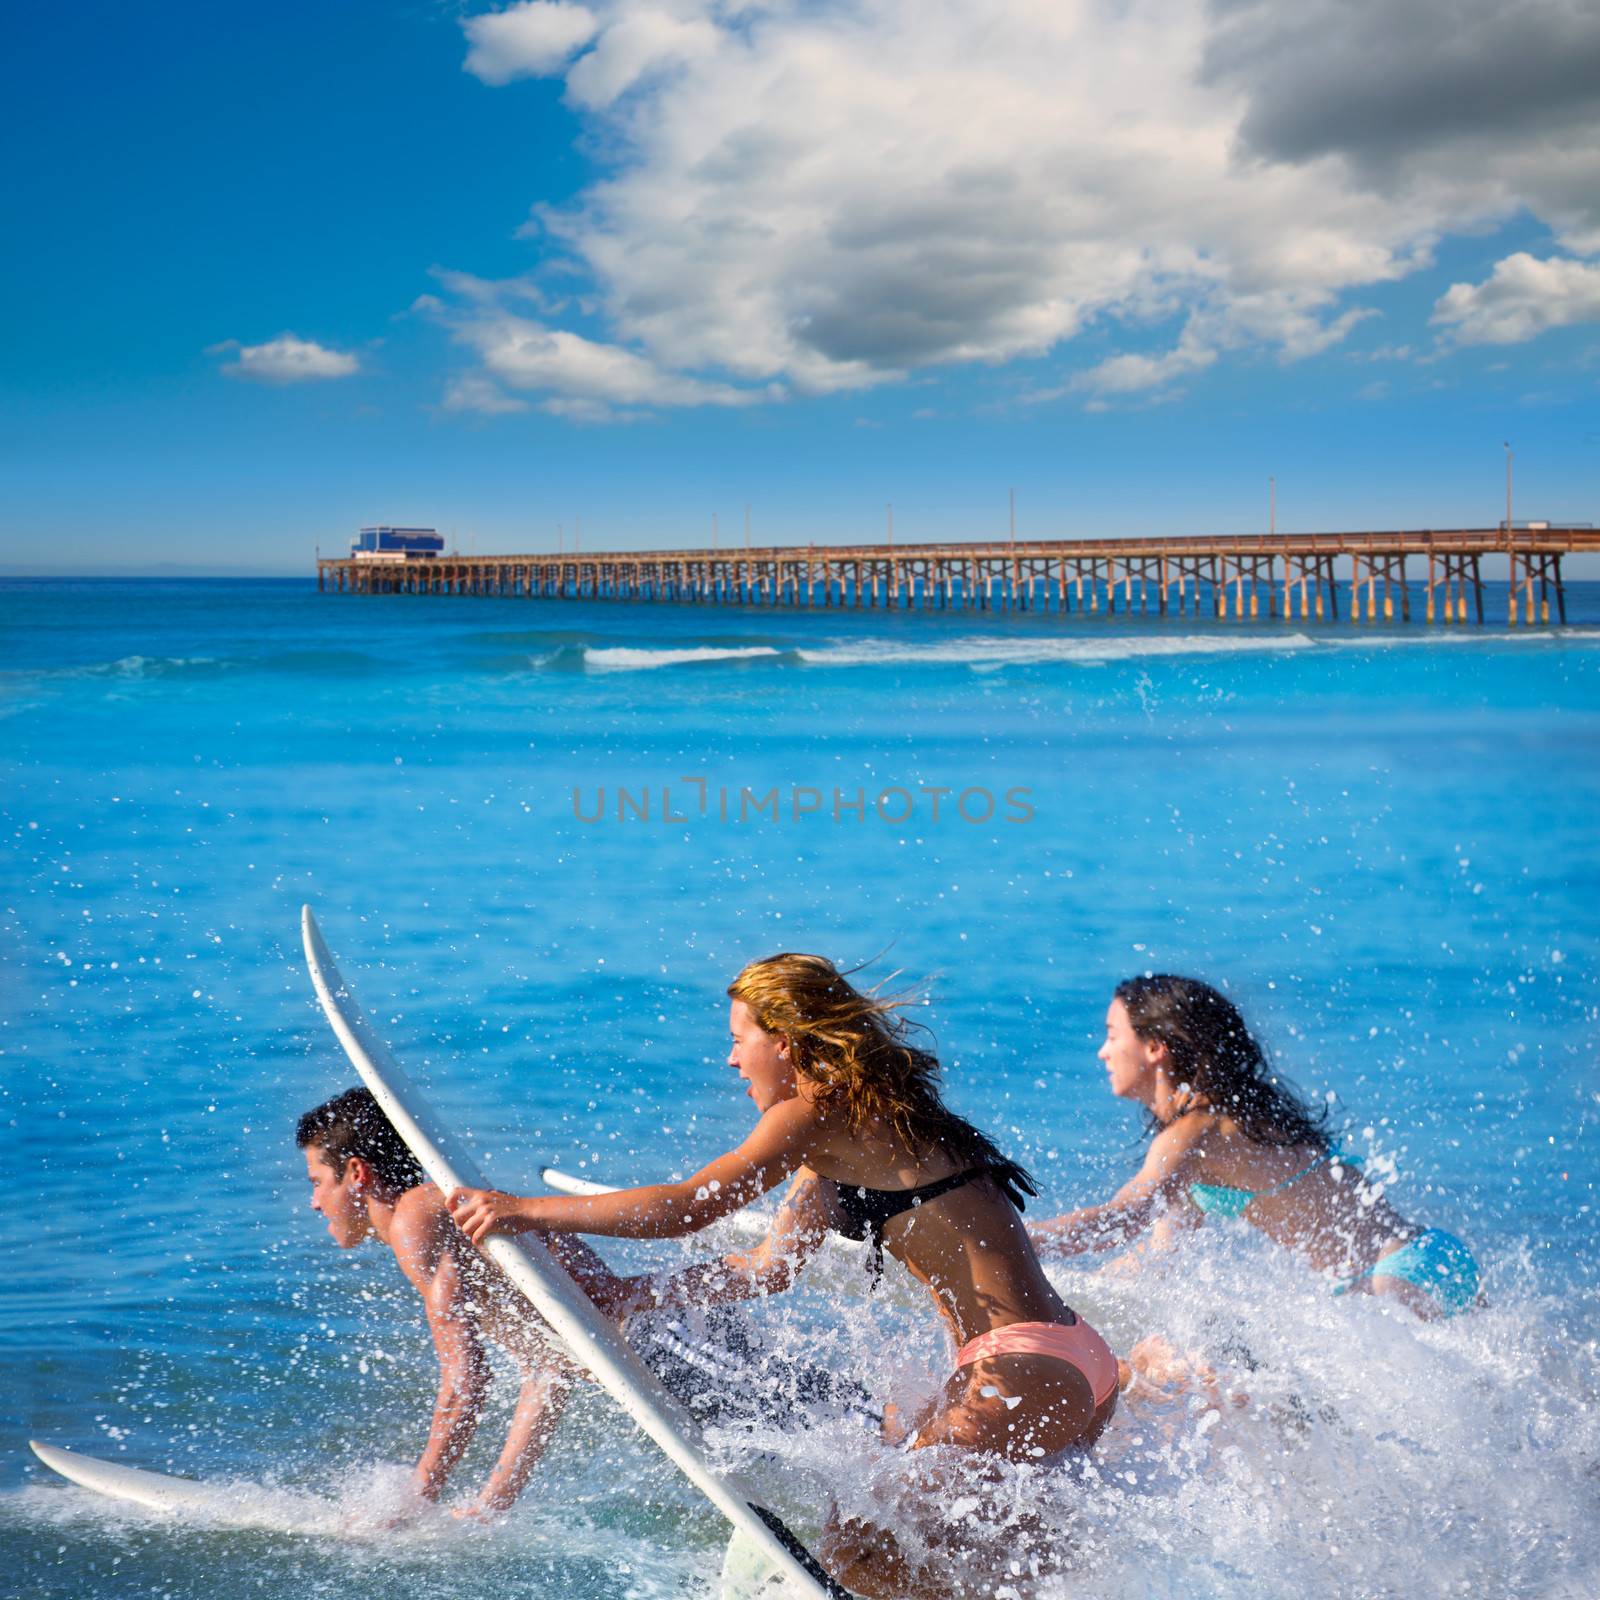 Teenager surfers surfing running jumping on surfboards at Newport pier beach California